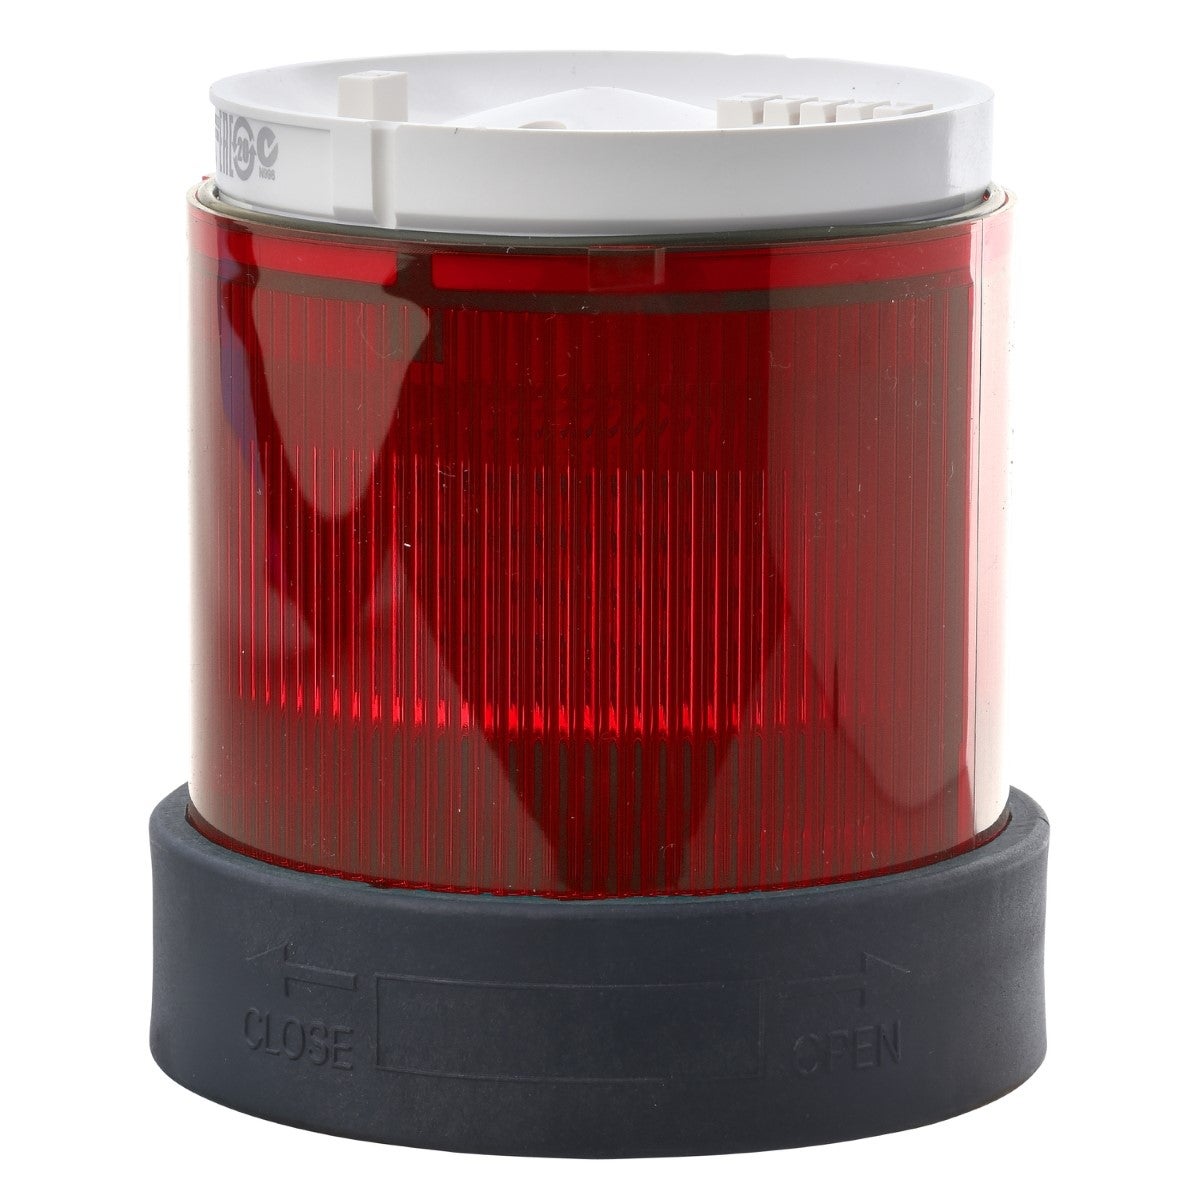 Indicator bank, Harmony XVB, illuminated unit, plastic, red, 70mm, steady, bulb or LED not included, 250V